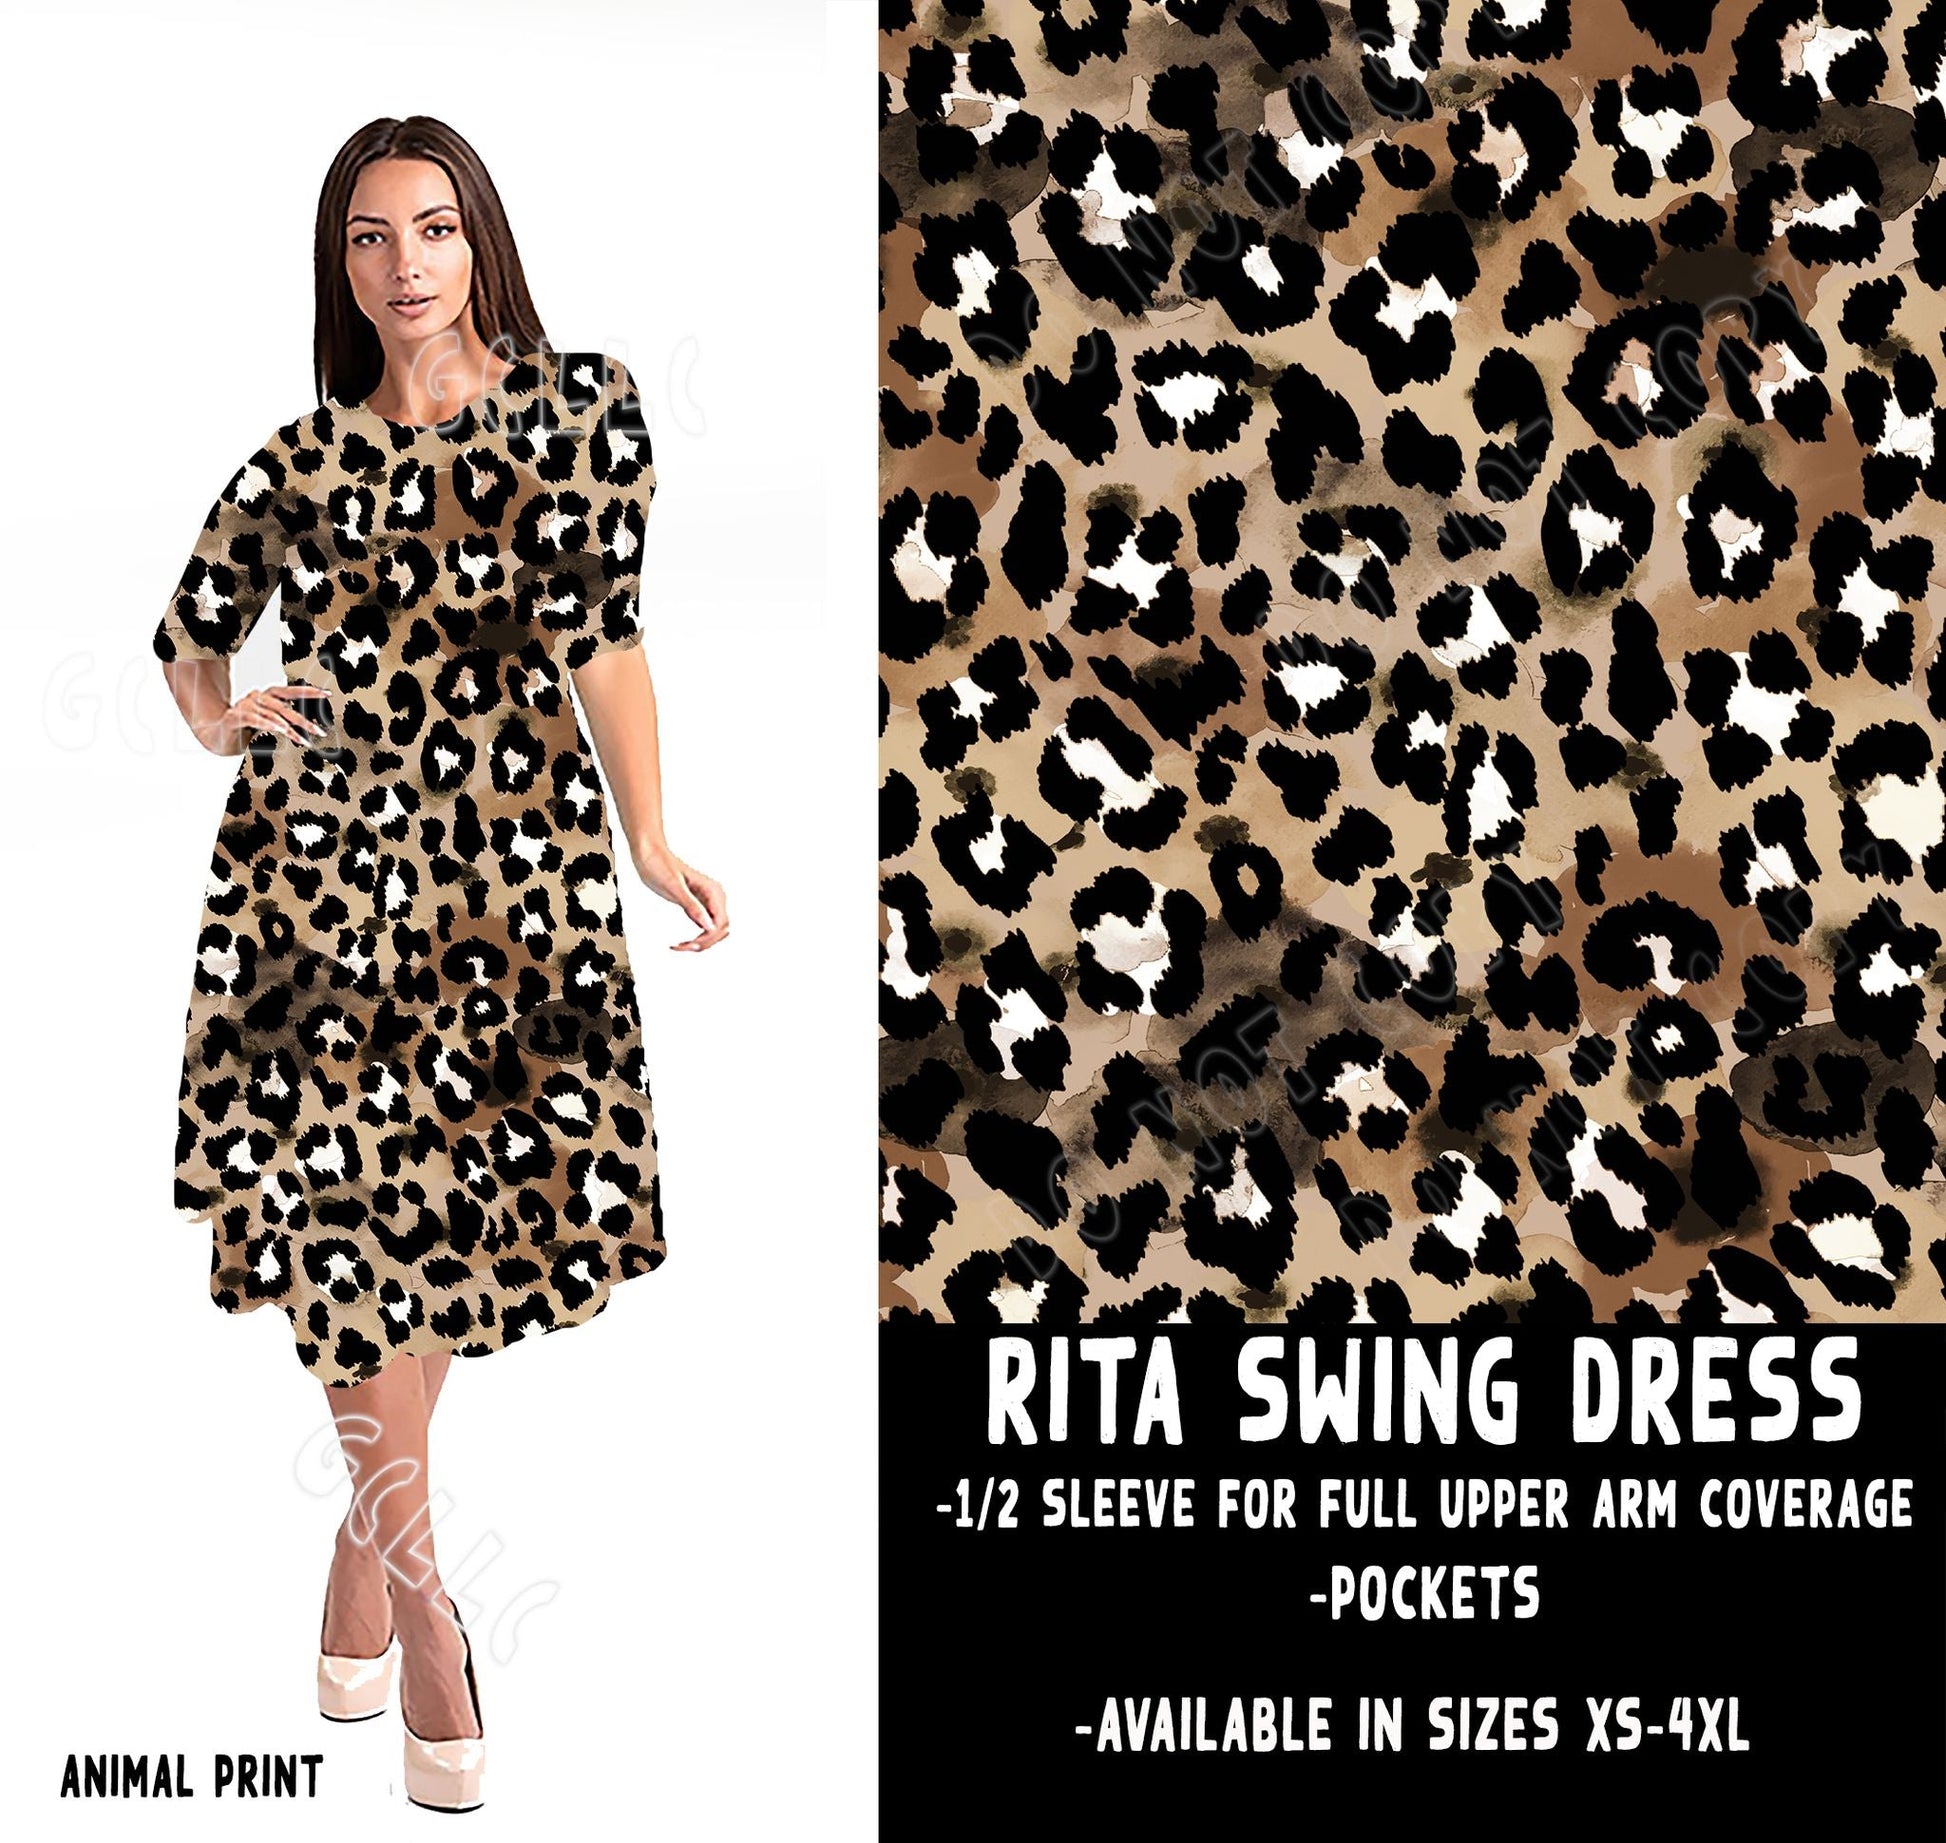 RITA SWING DRESS RUN-ANIMAL PRINT - Alonna's Legging Land